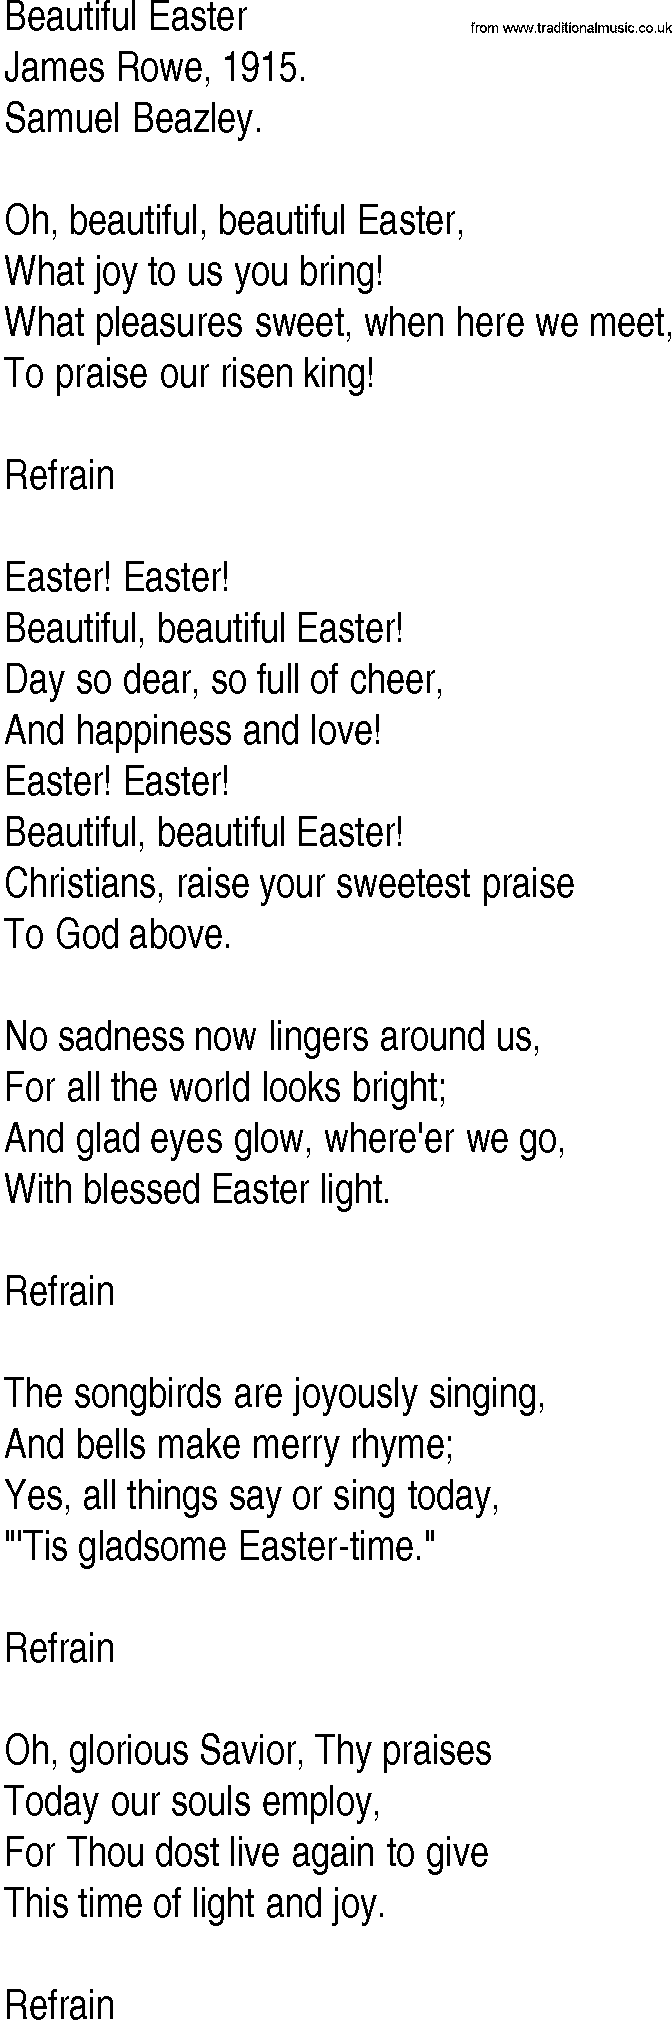 Hymn and Gospel Song: Beautiful Easter by James Rowe lyrics